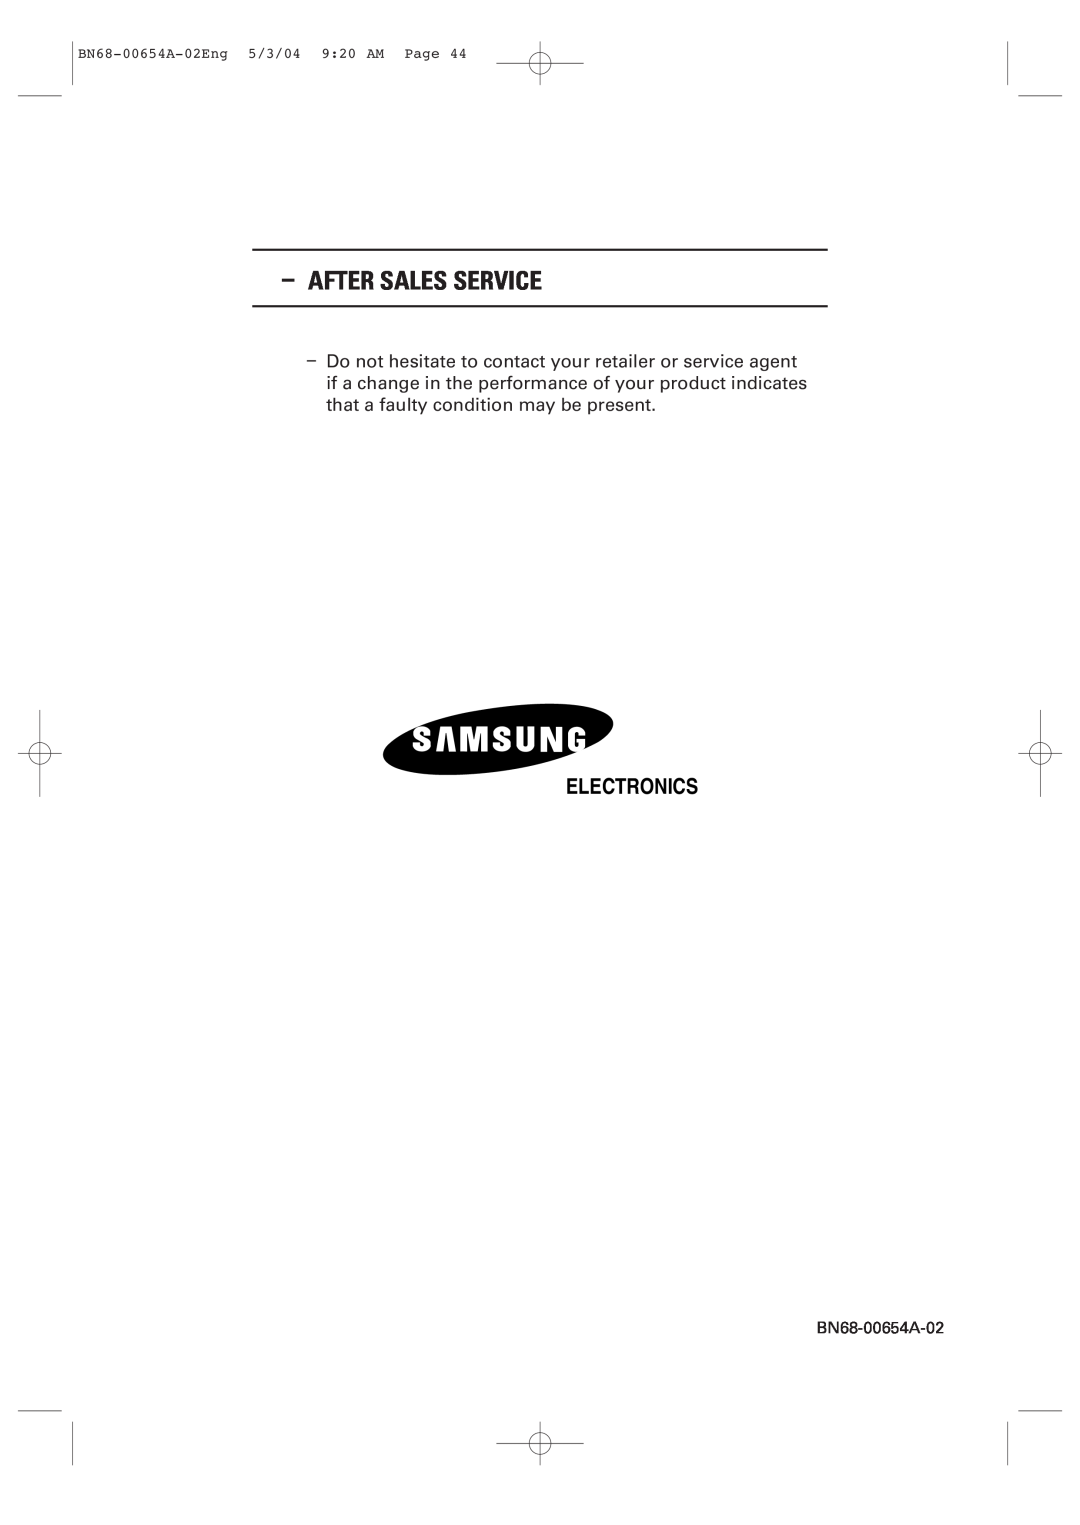 Samsung PPM63H3Q, PPM 42S3Q, PPM 50H3Q manual After Sales Service, Electronics, BN68-00654A-02Eng 5/3/04 920 AM Page 